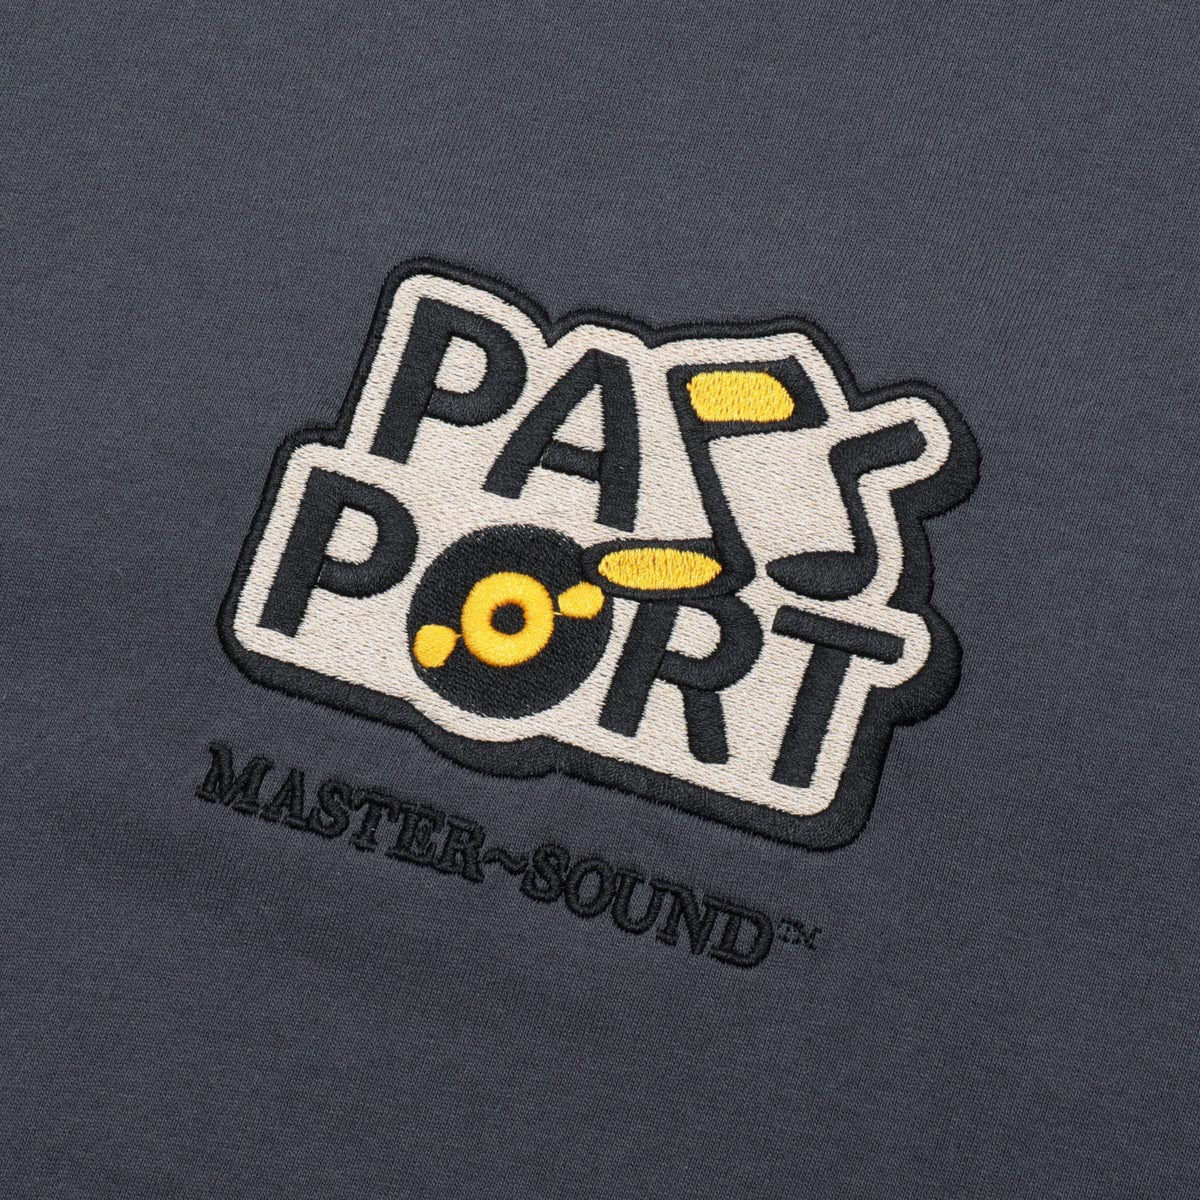 Passport Master Sound T-Shirt - Tar image 2